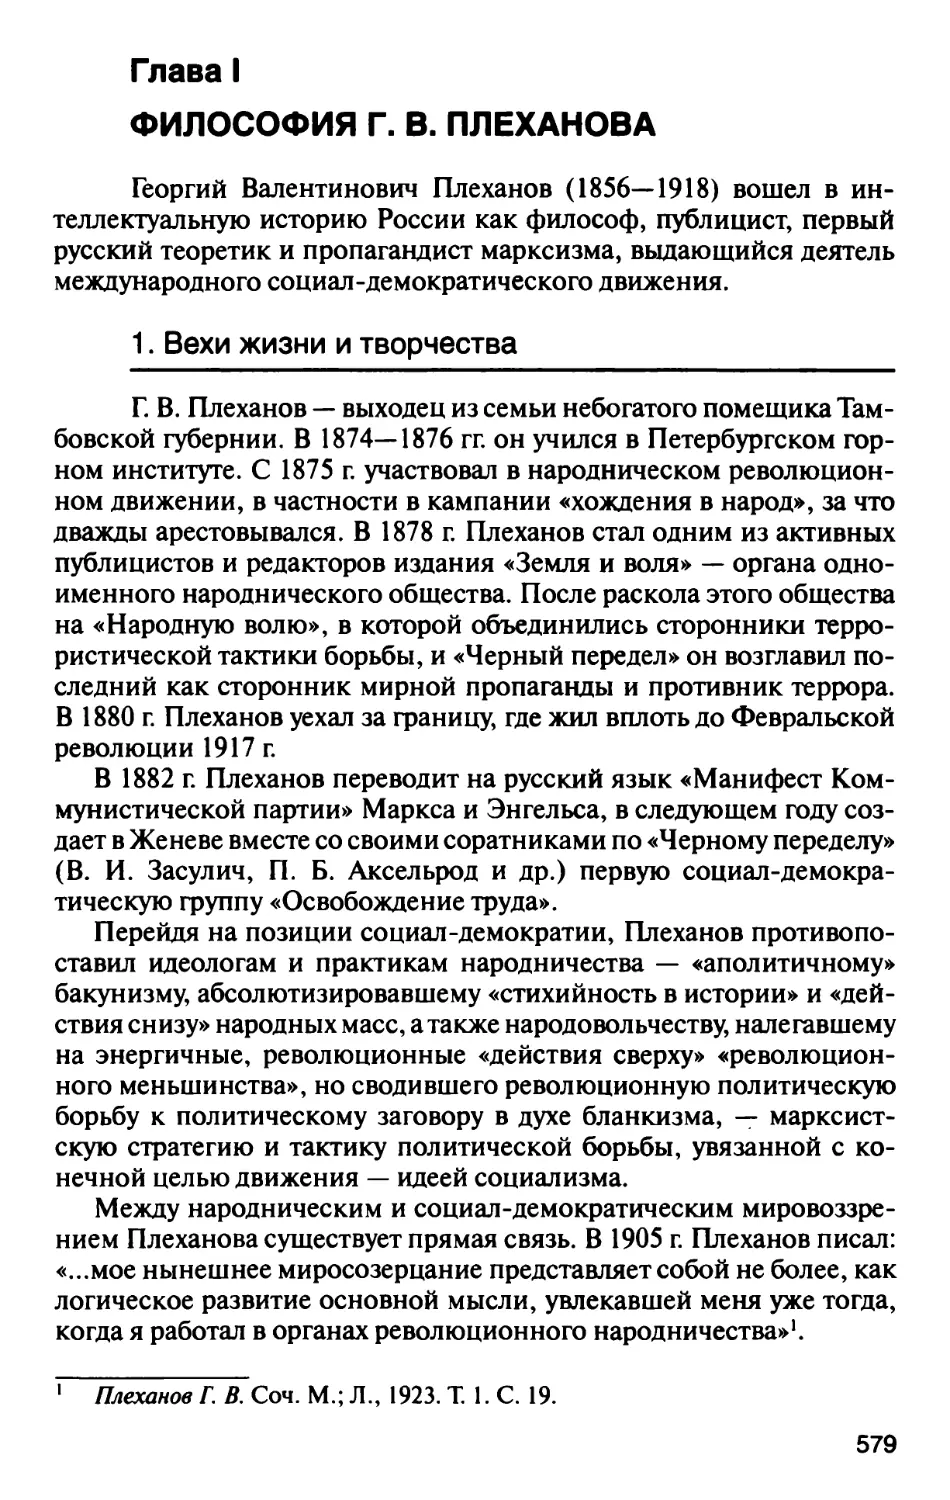 Глава I. Философия Г.В. Плеханова